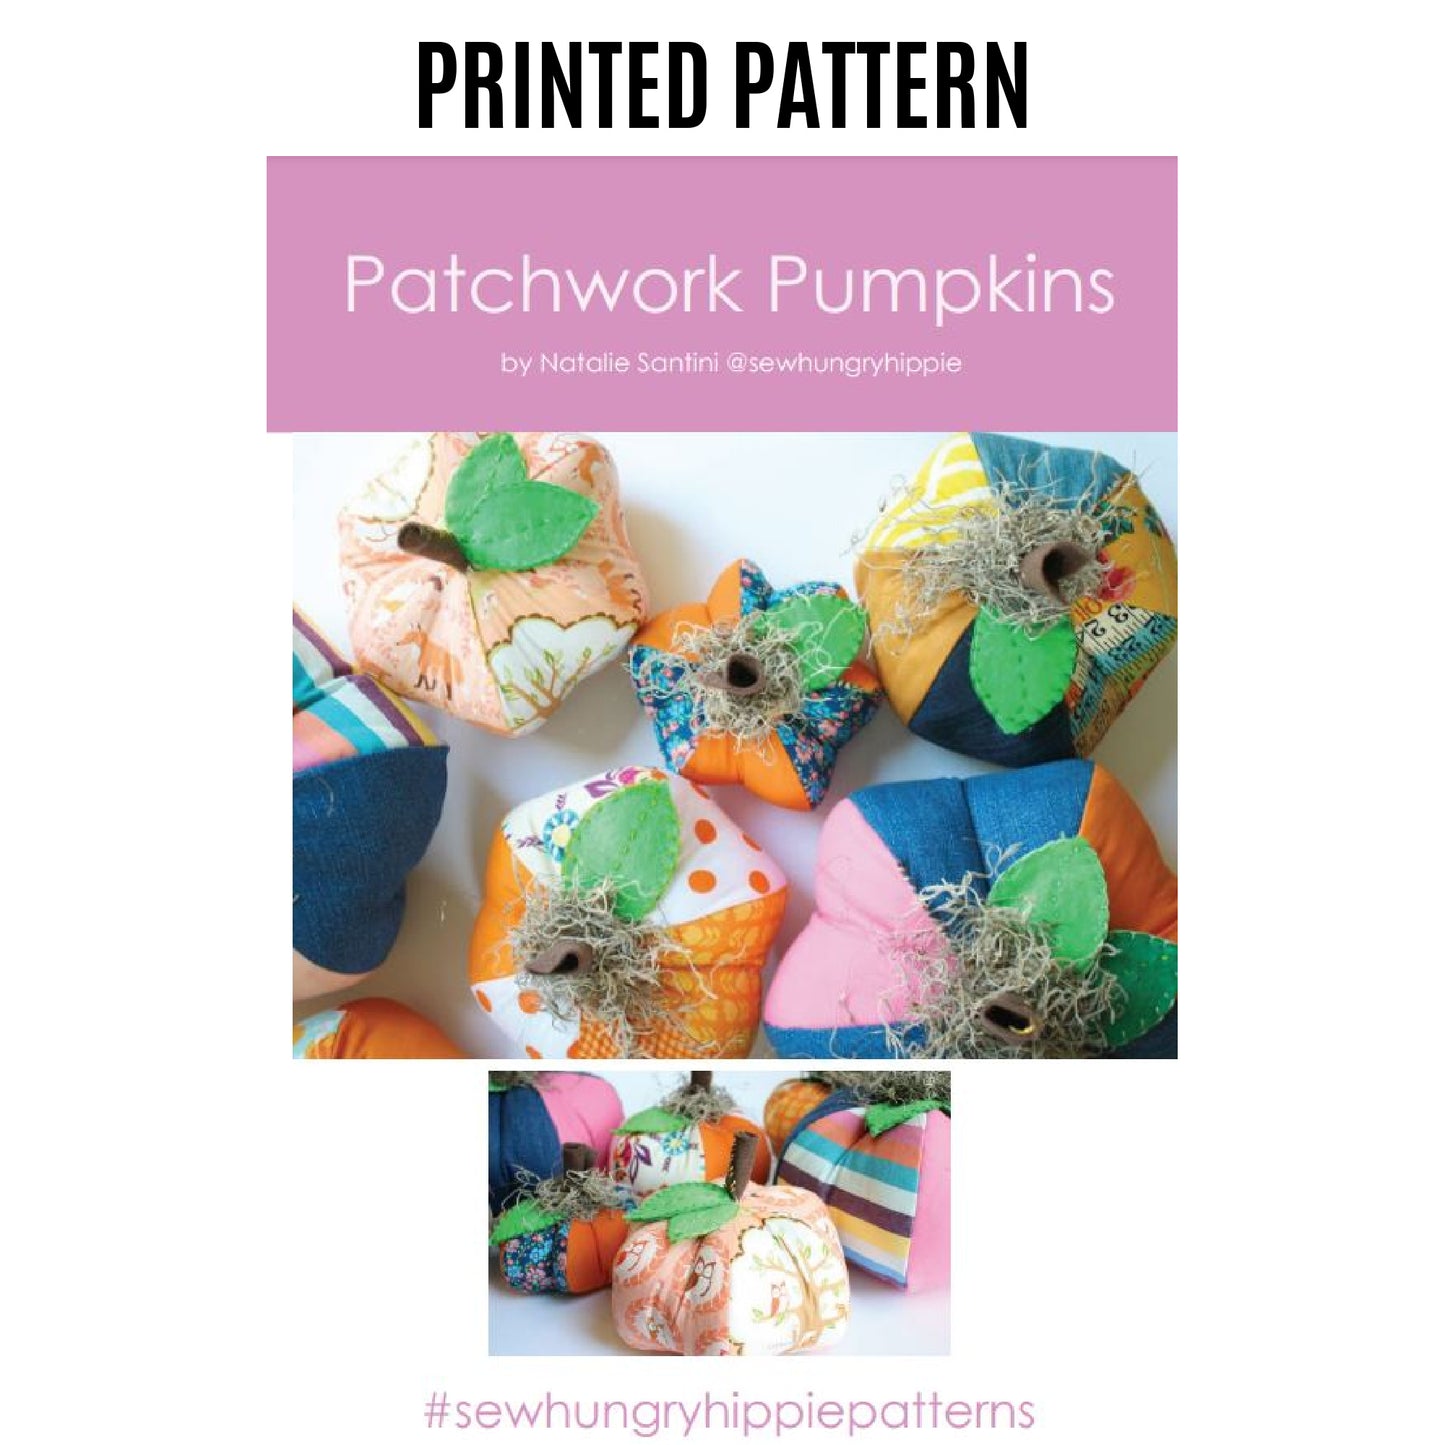 Patchwork Pumpkins printed pattern